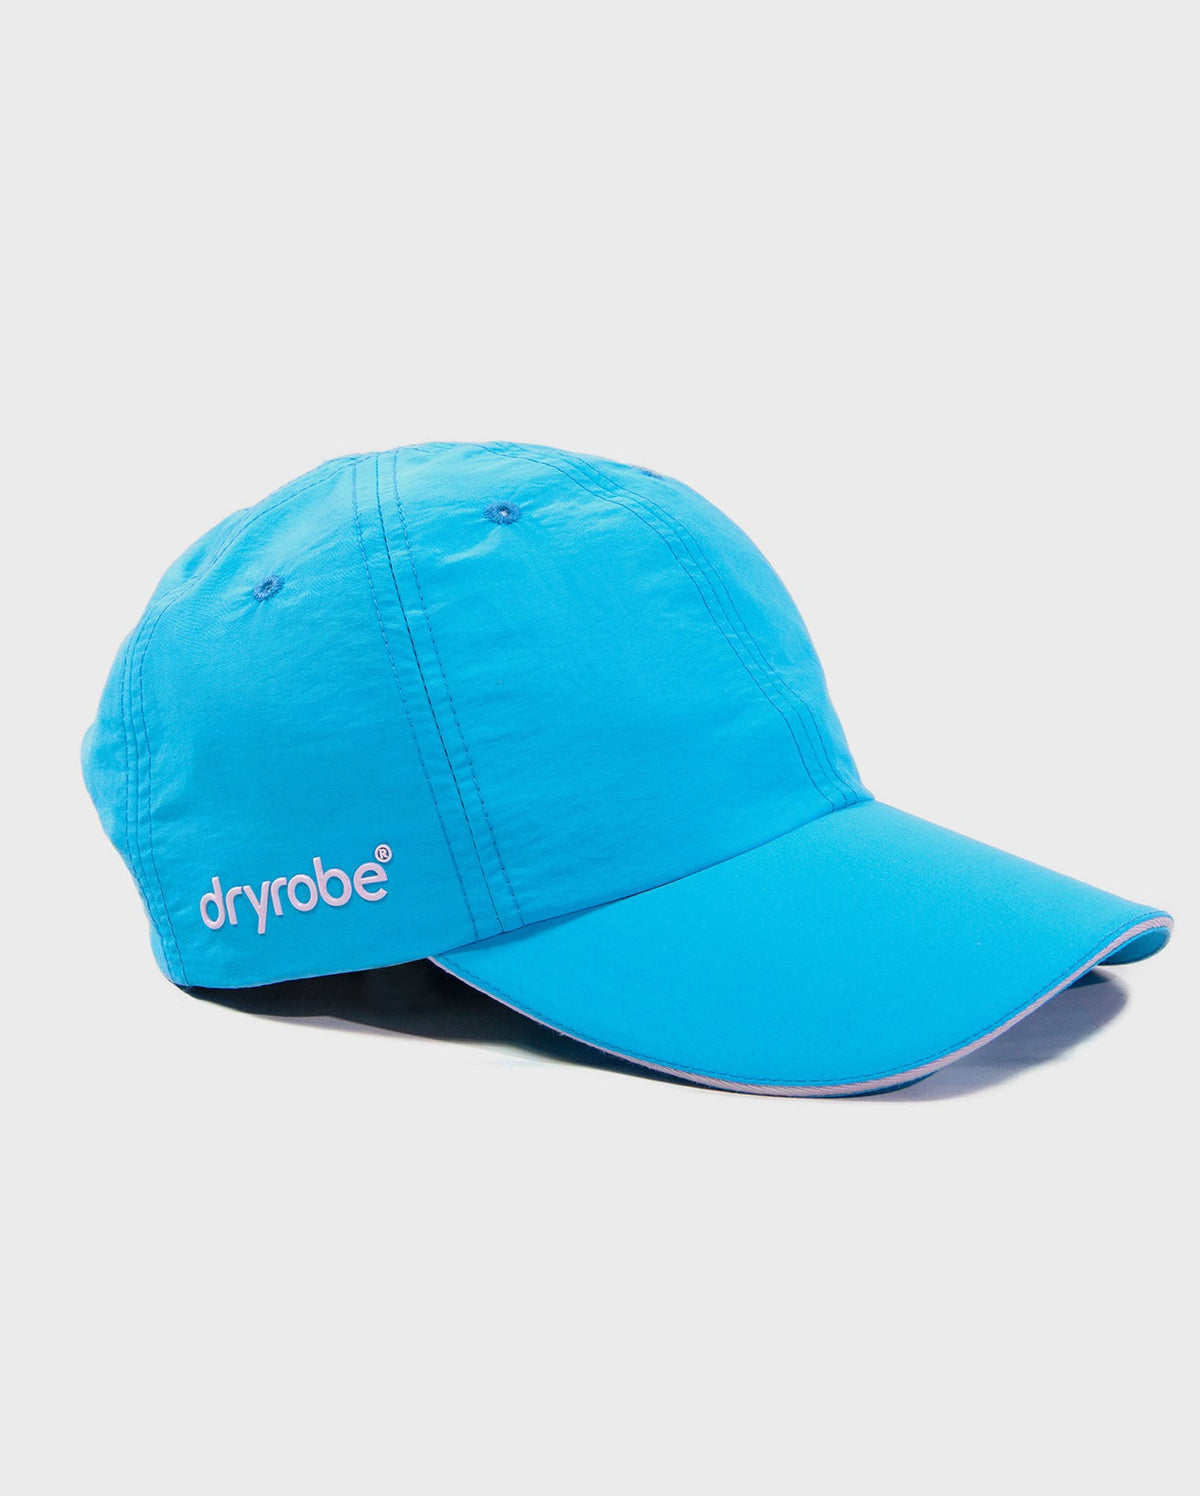 1|Blue dyrobe® quick dry cap 